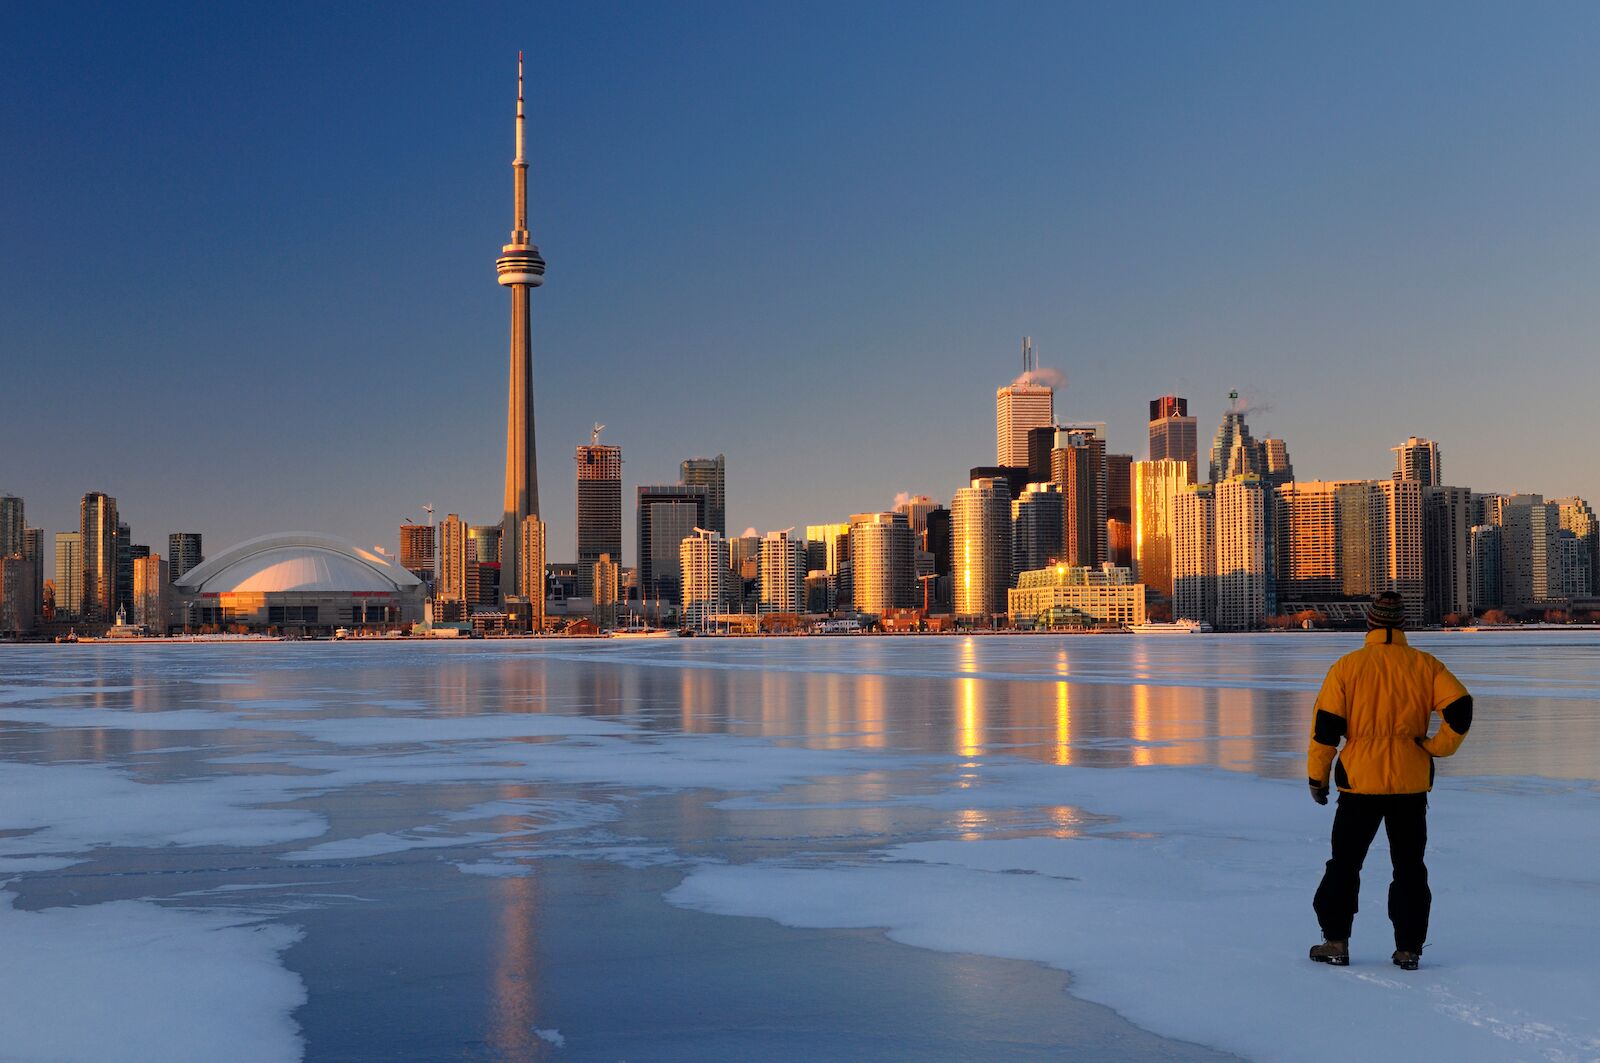 frozen Lake Ontario and the skyline of Toronto